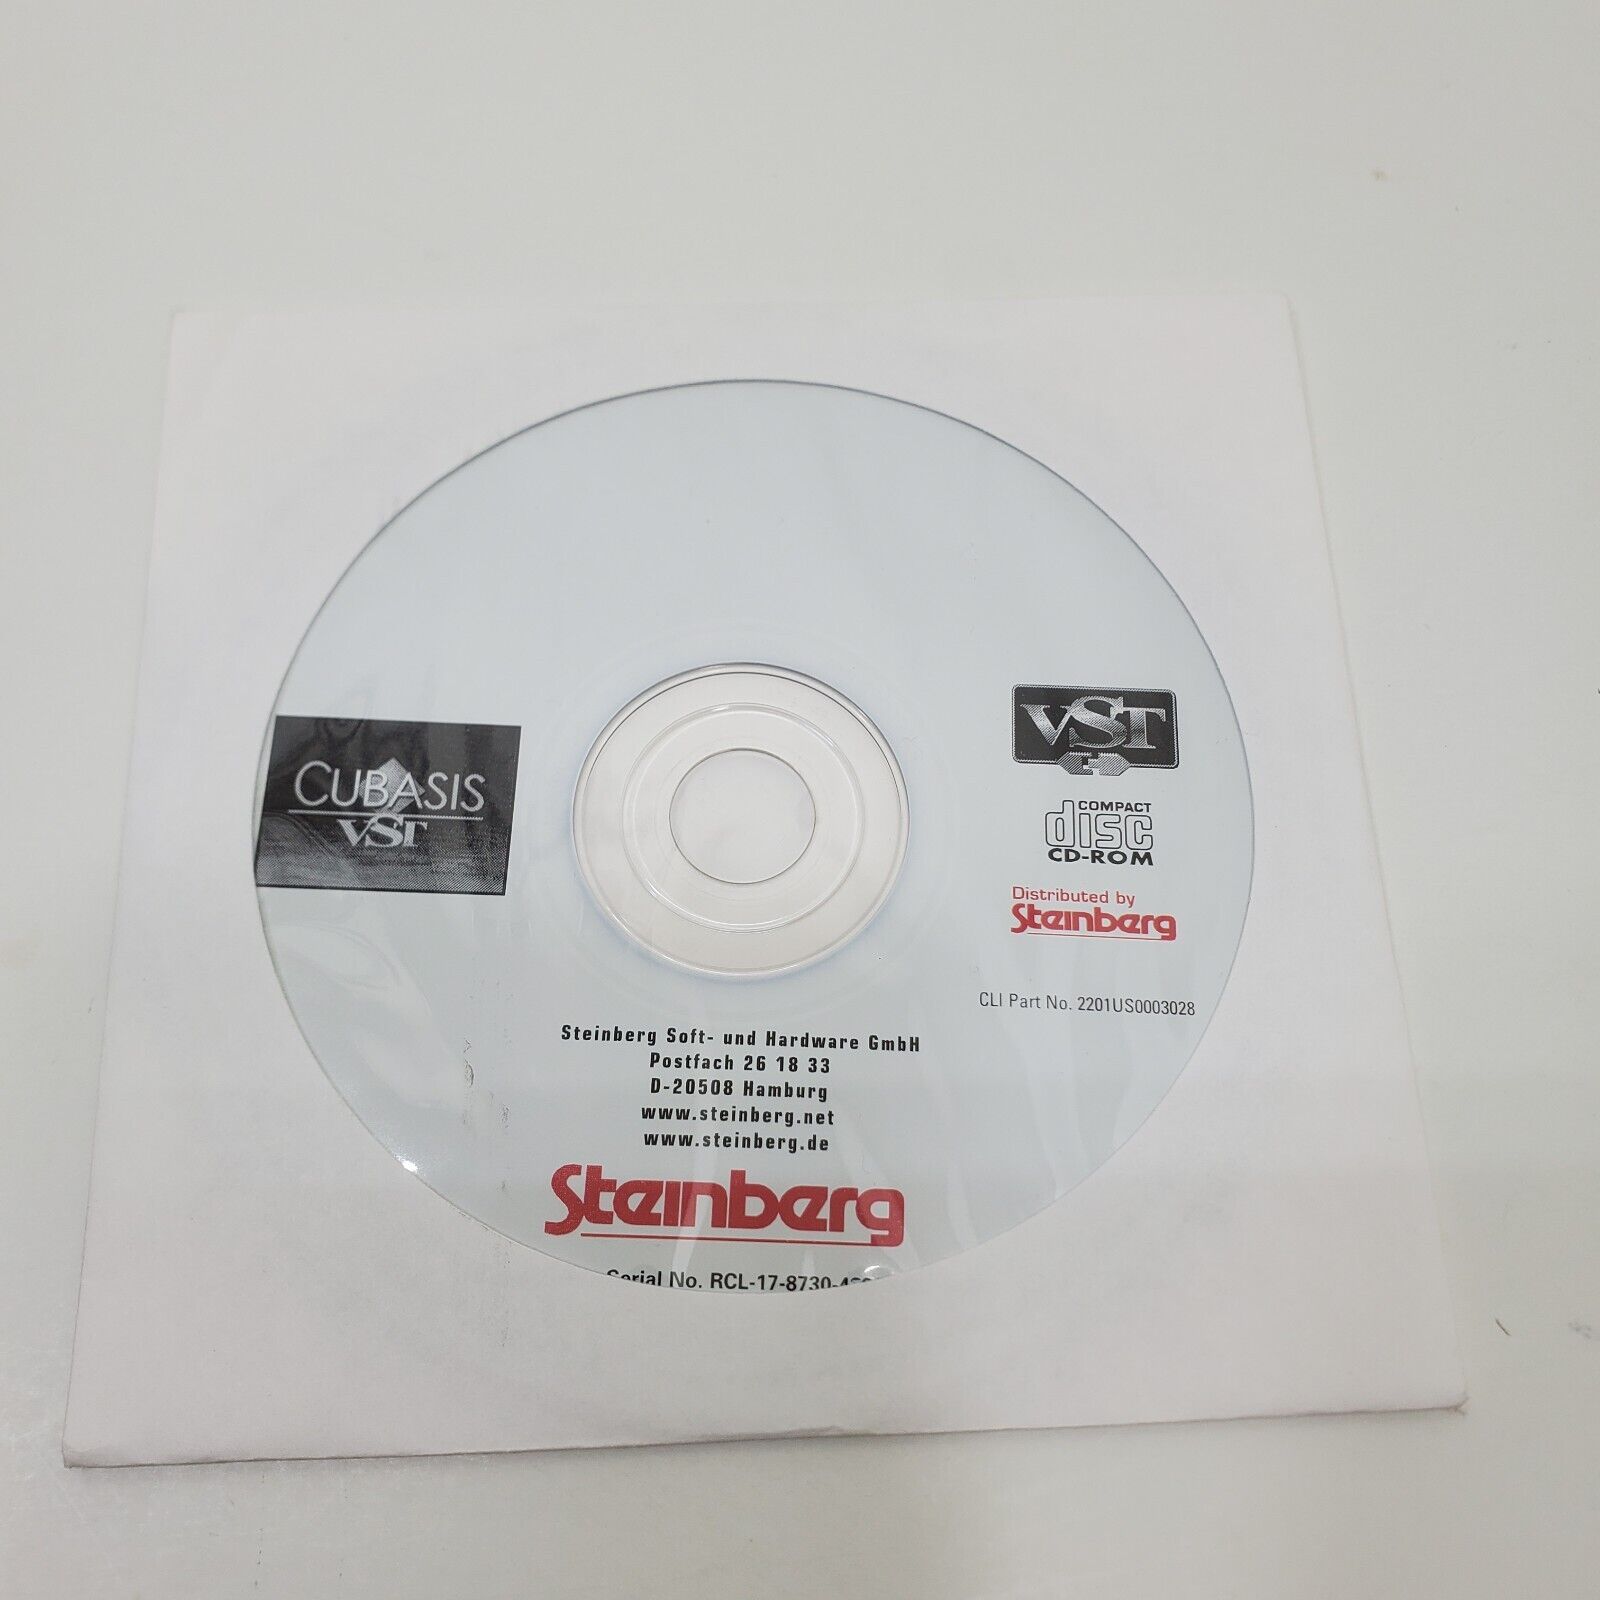 Vintage Original Cubasis VST Steinberg Software 1999 Rare Vintage Audio CD-ROM